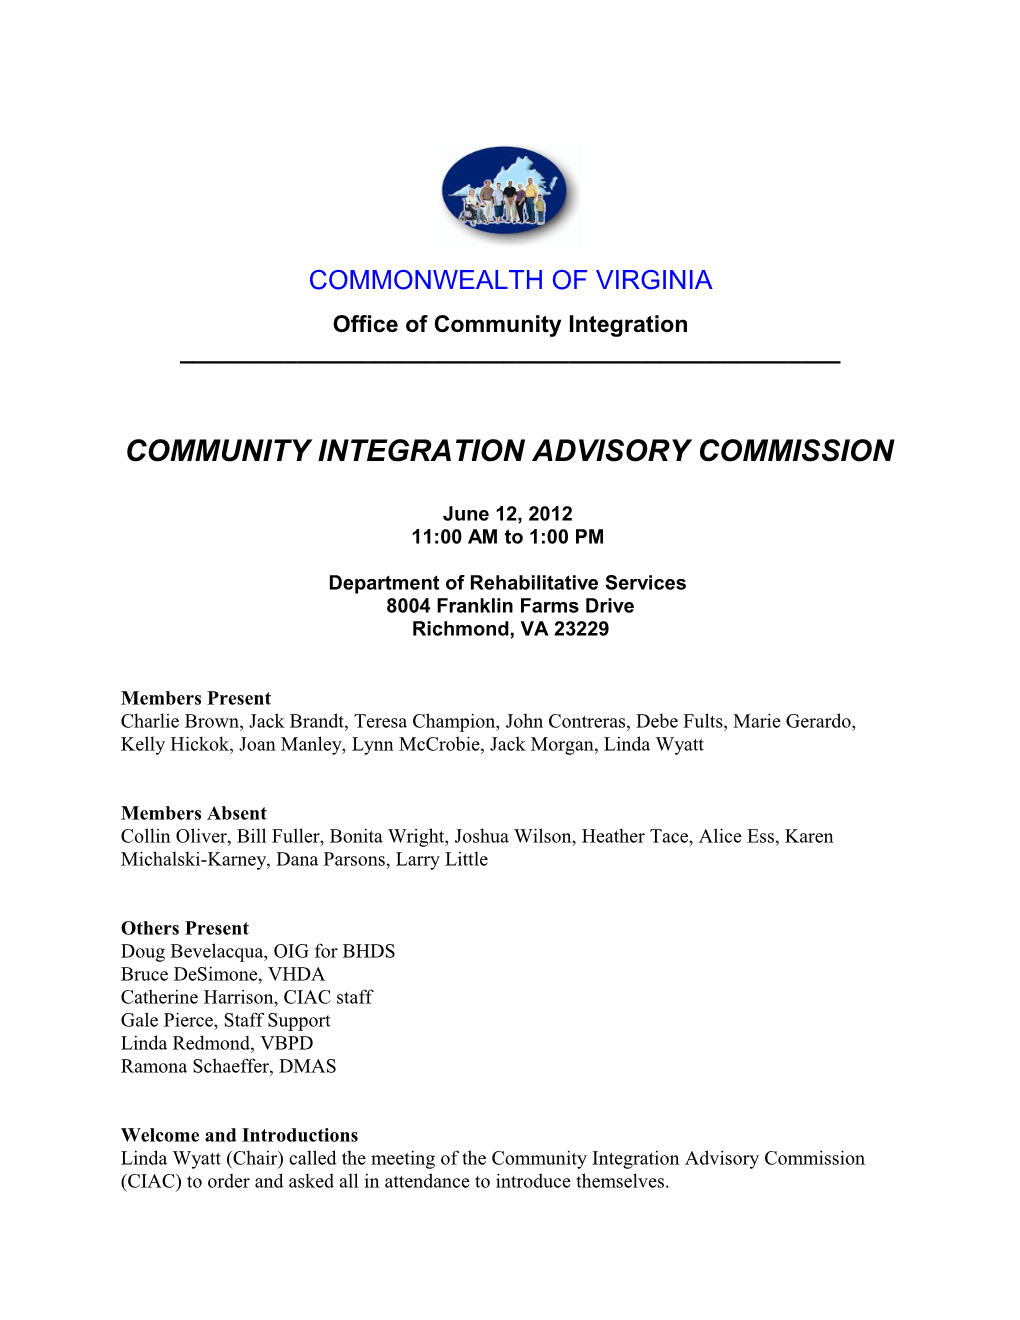 Community Integration Advisory Commission